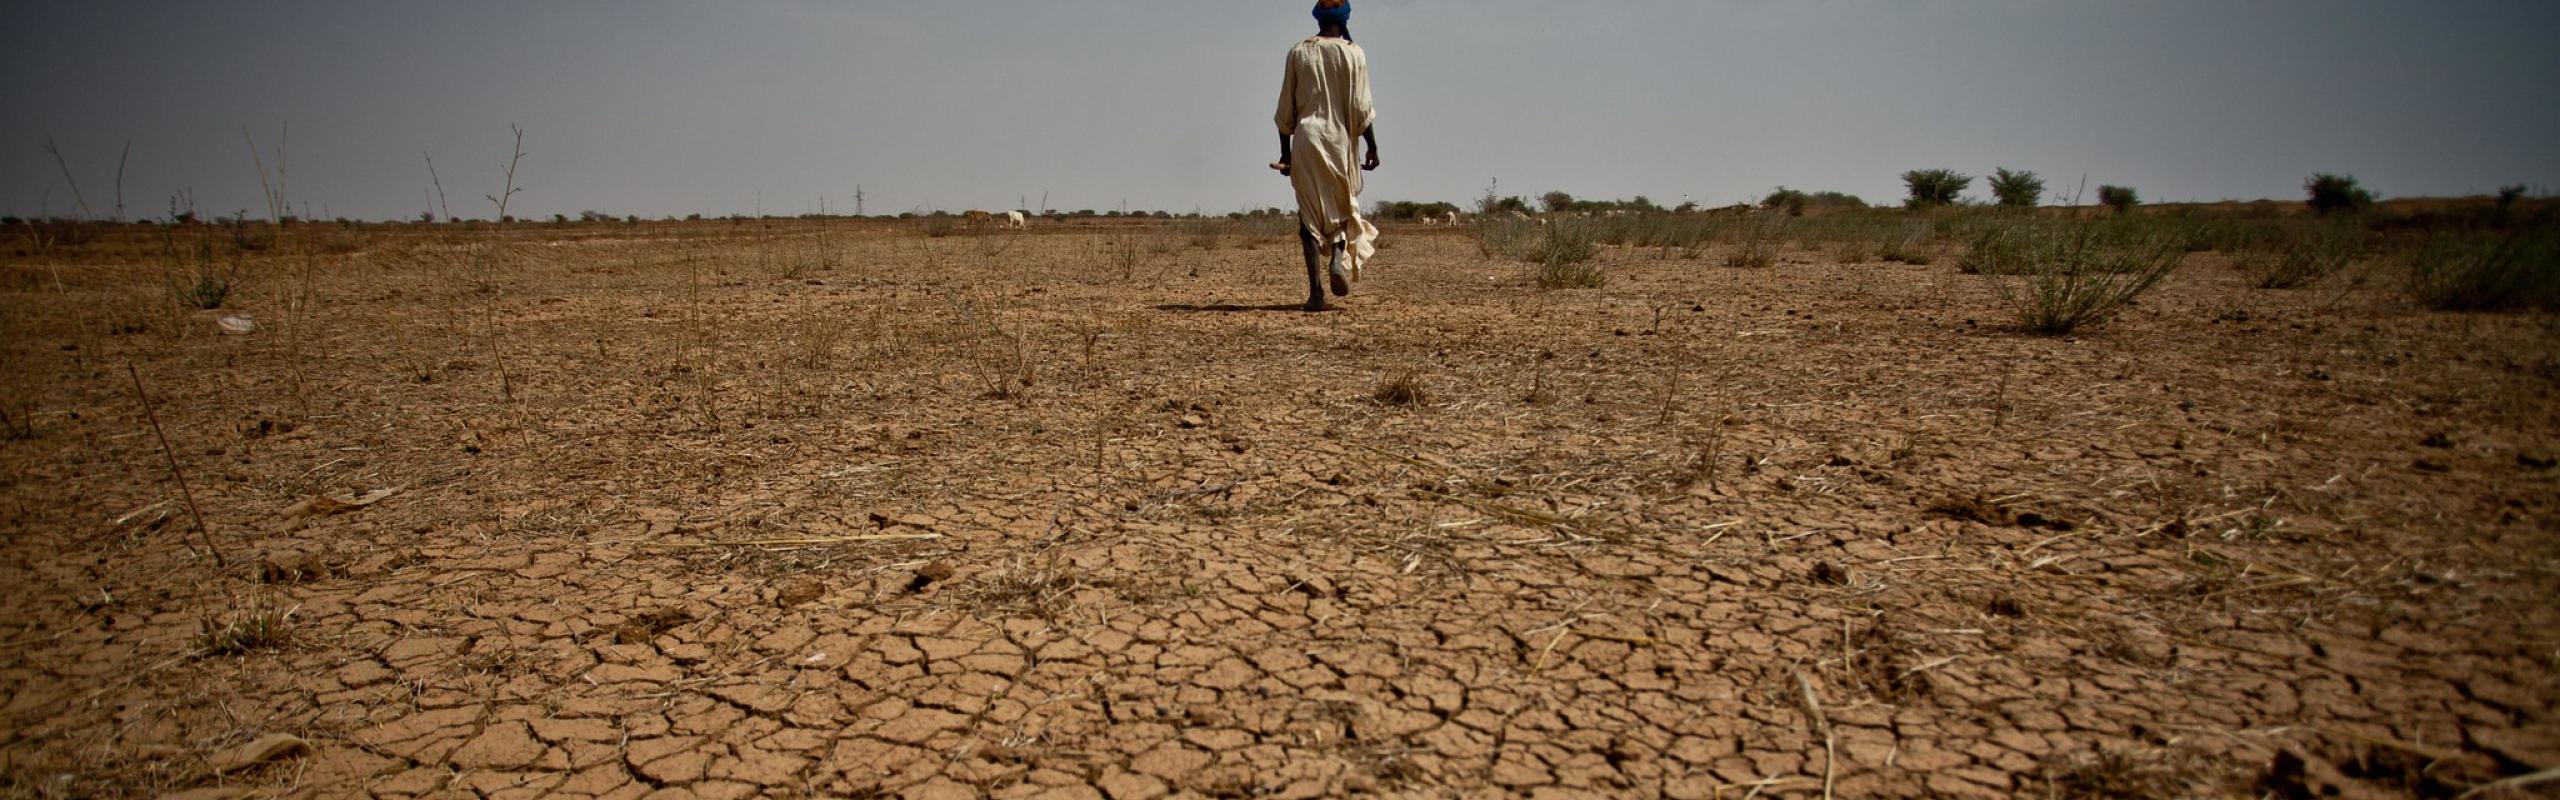 Person walks away from camera across arid soil in Mauritania